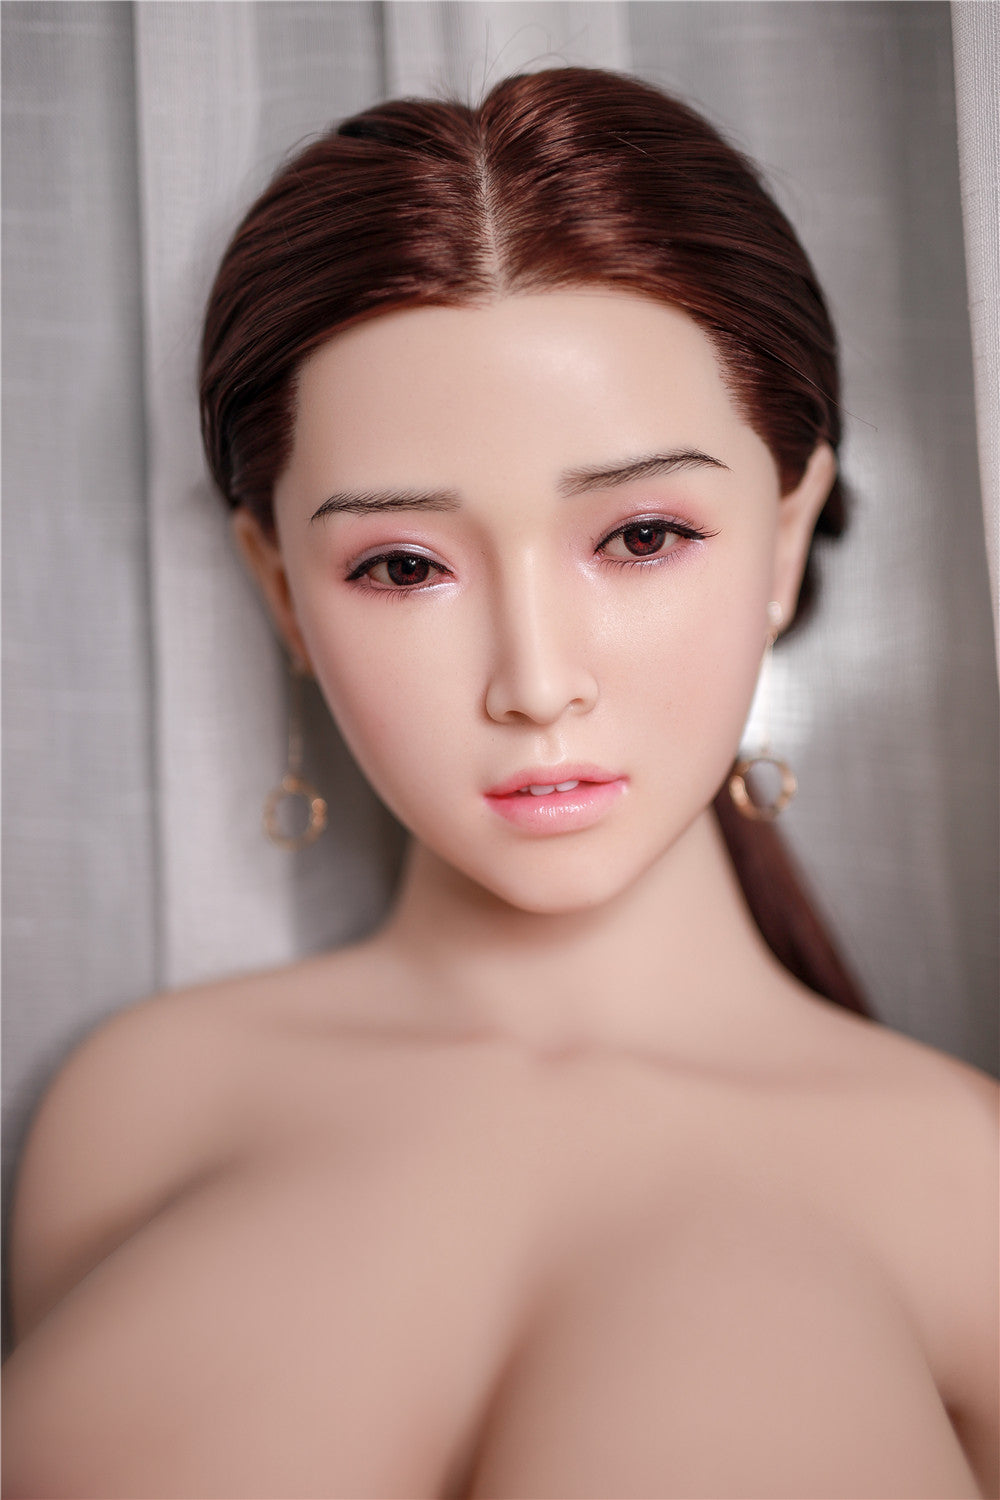 JY Doll - Lifelike Love Doll - 5ft 7in (170cm) - Emma - Love Dolls 4U